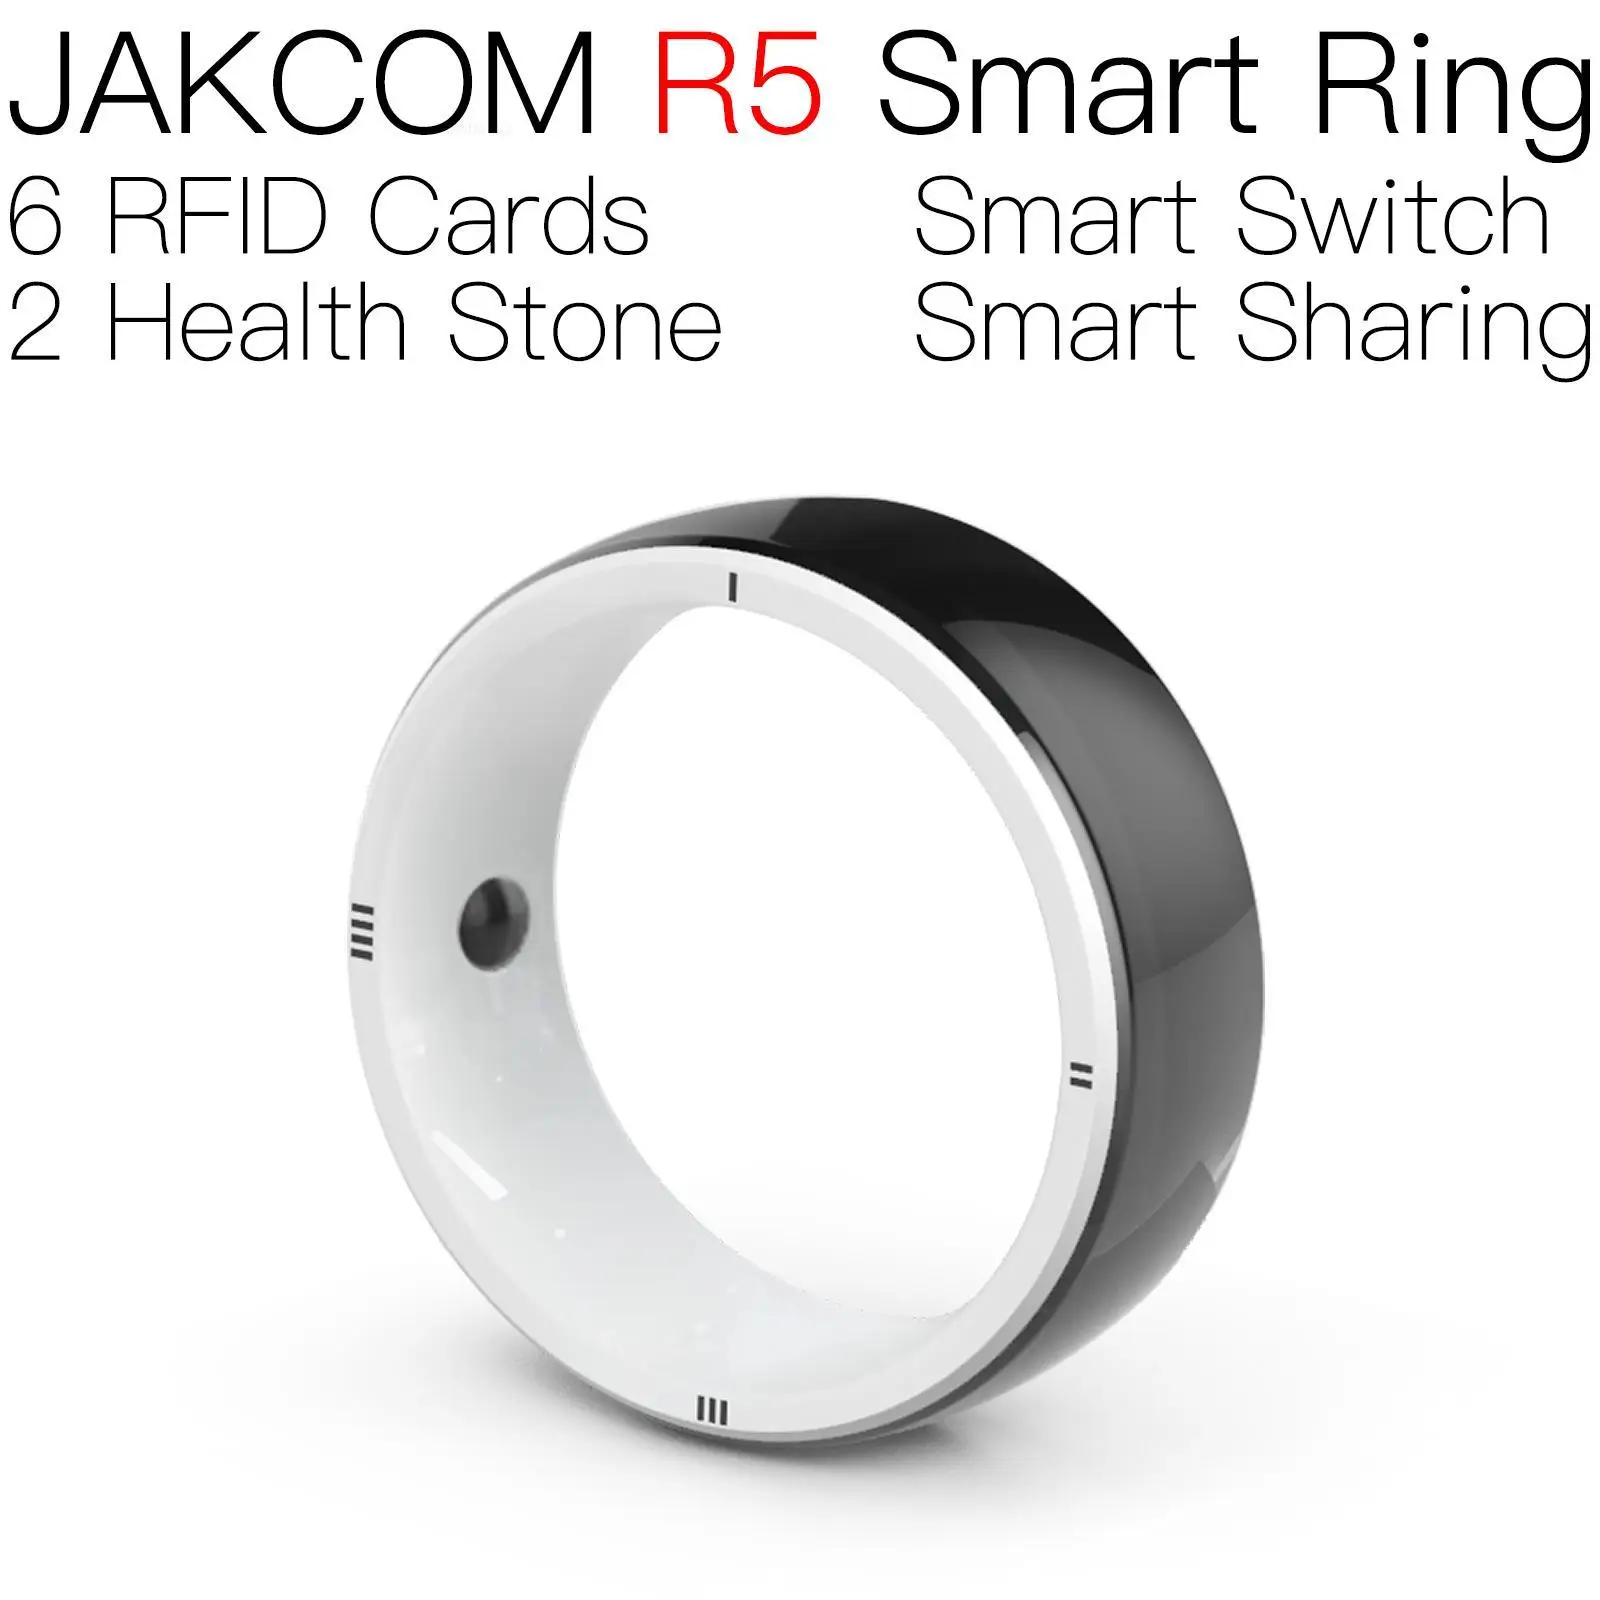 

JAKCOM R5 Smart Ring better than etiqueta adesiva uhf em4305 rewritable nfc ring tag chip uid rfid 125khz 50 animal reader pet